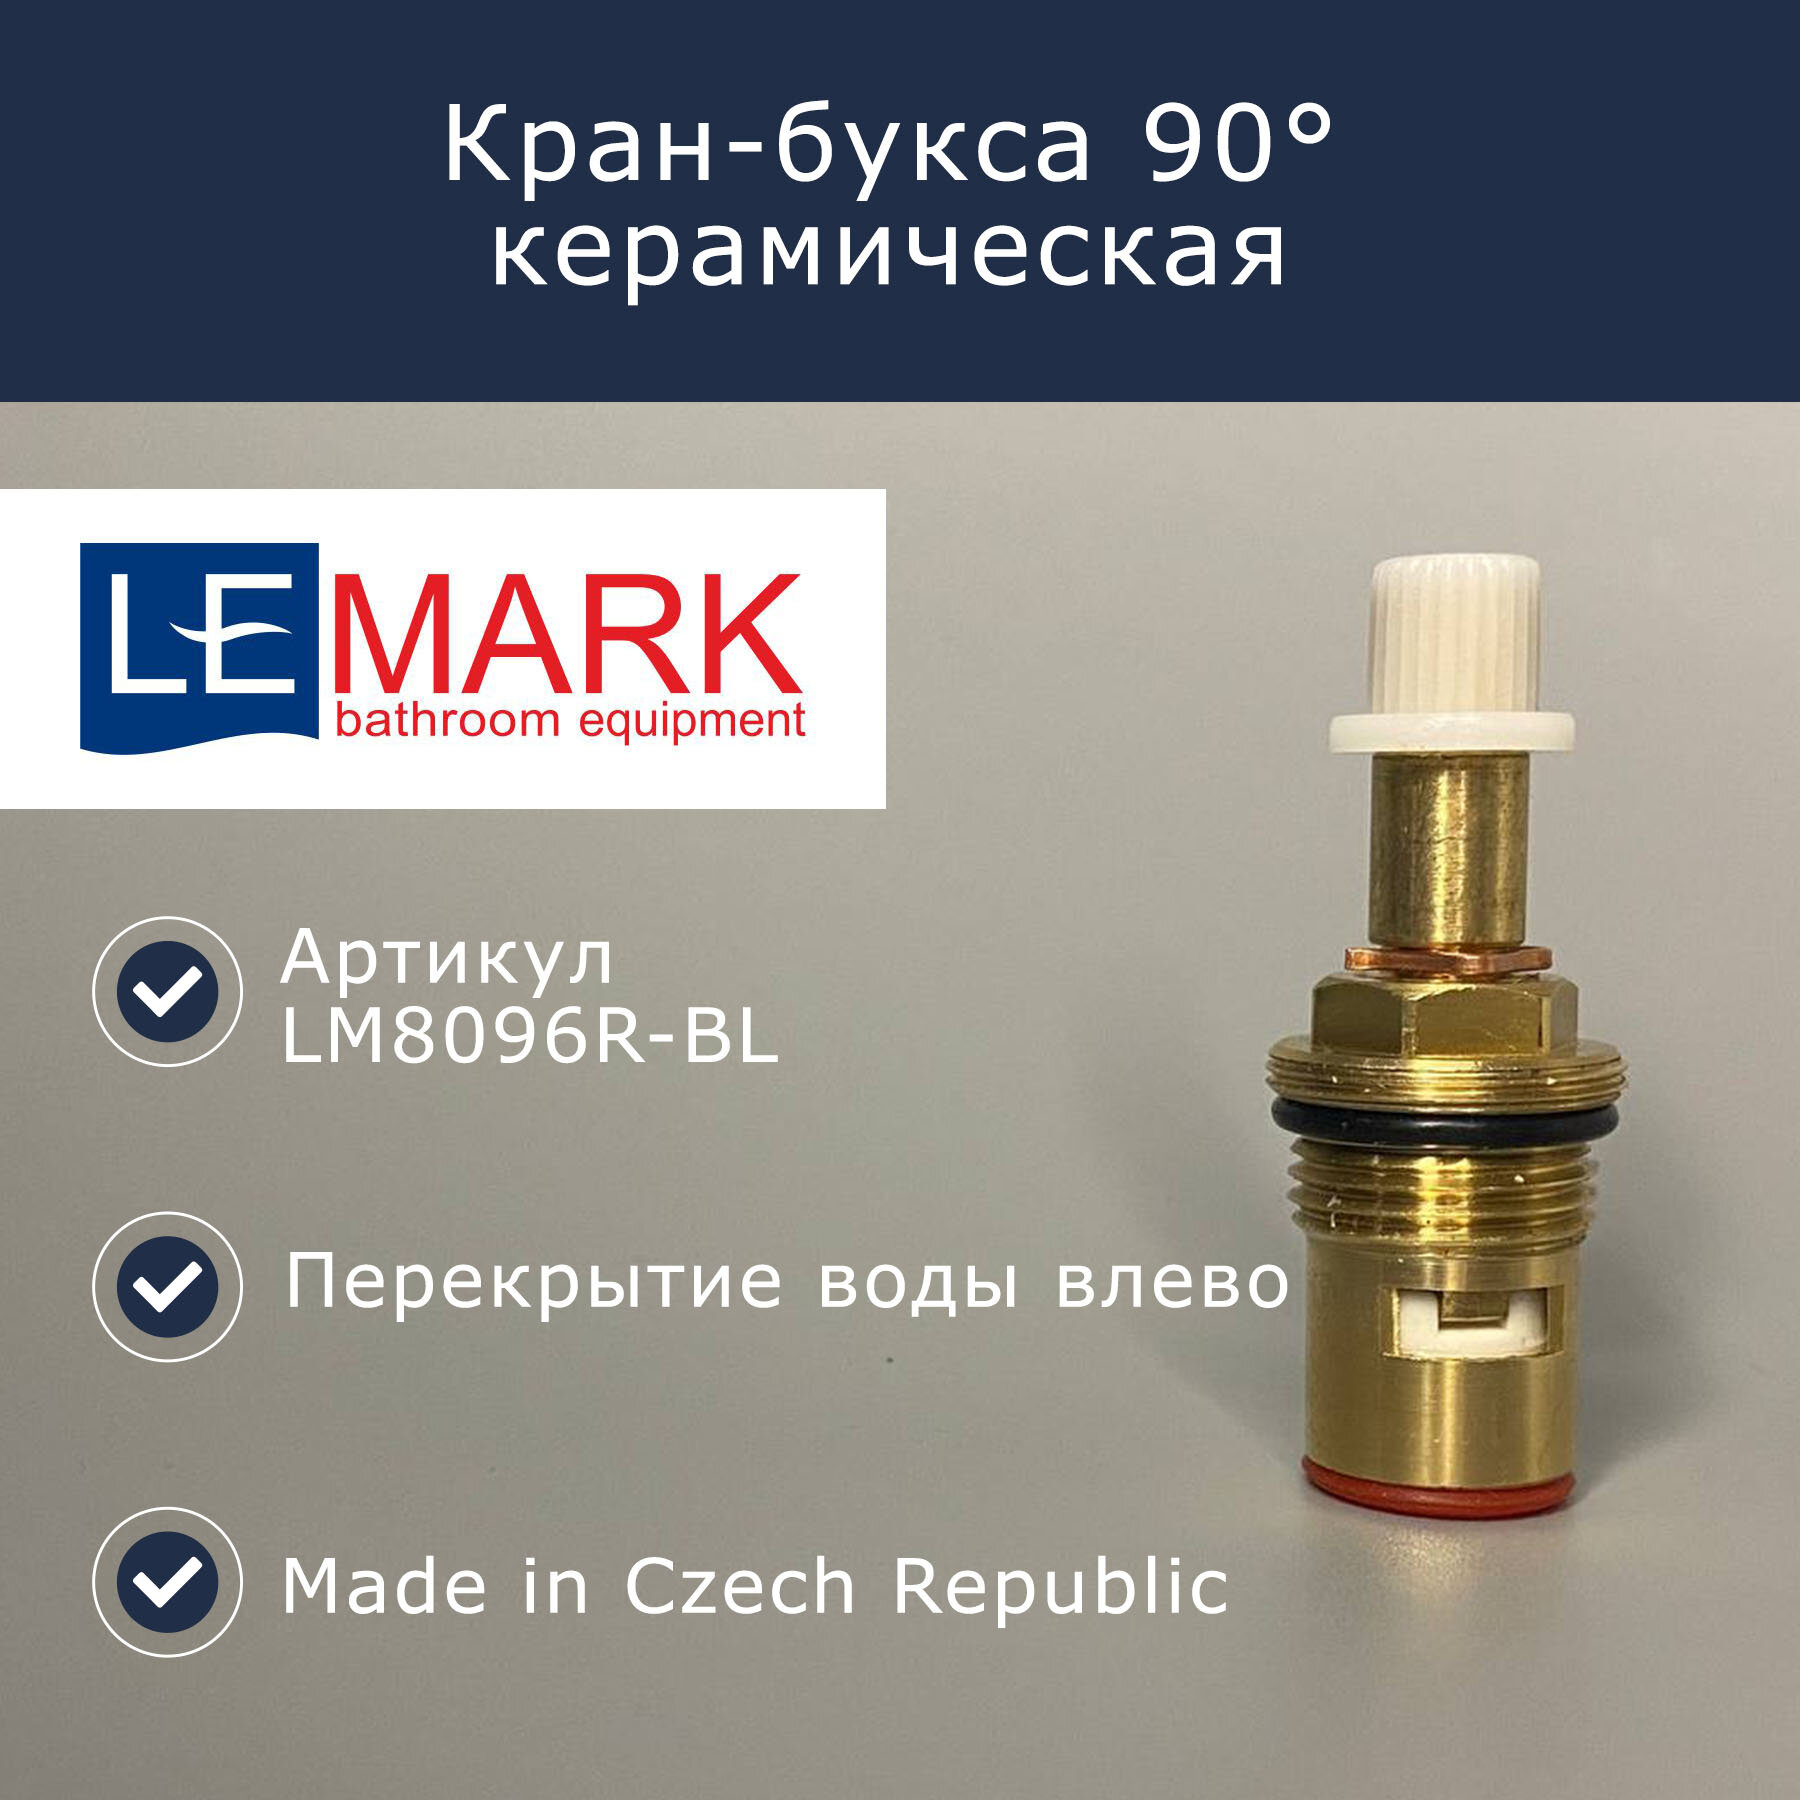 Кран-букса 90 влево Lemark (LM8096R)